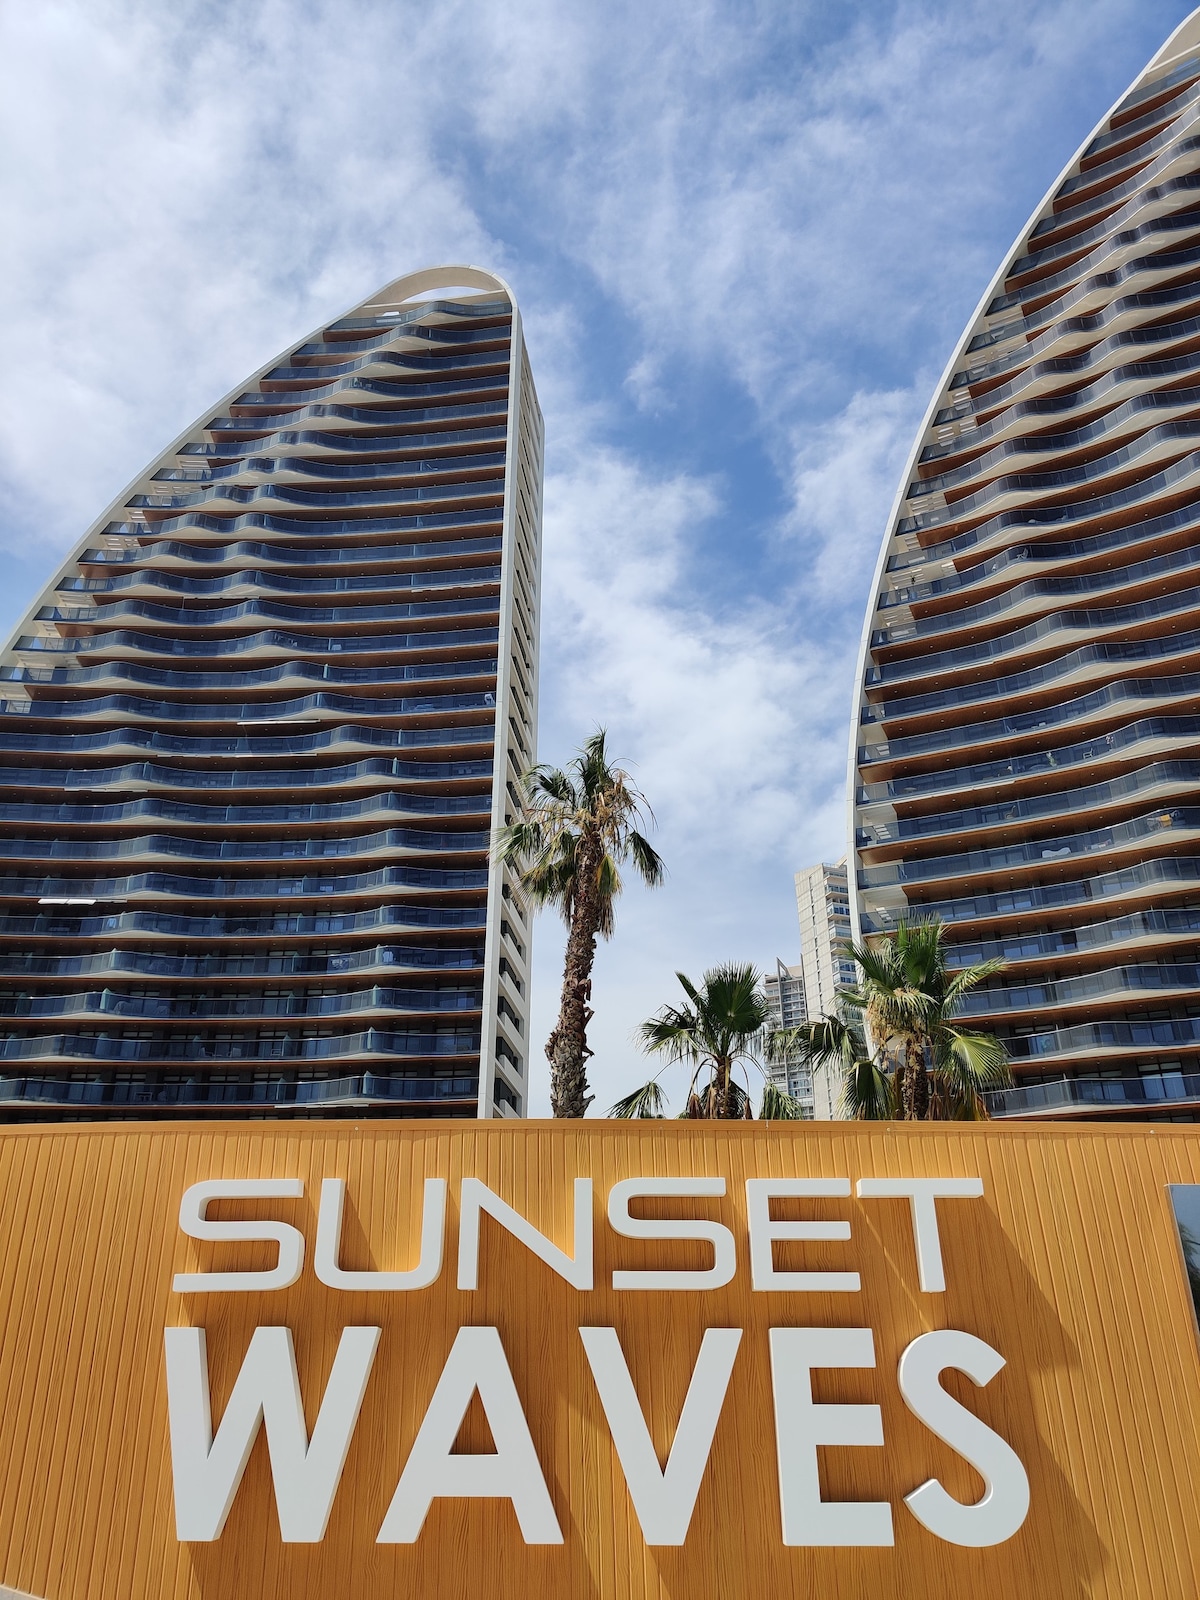 Sunset Waves blue sky apartment